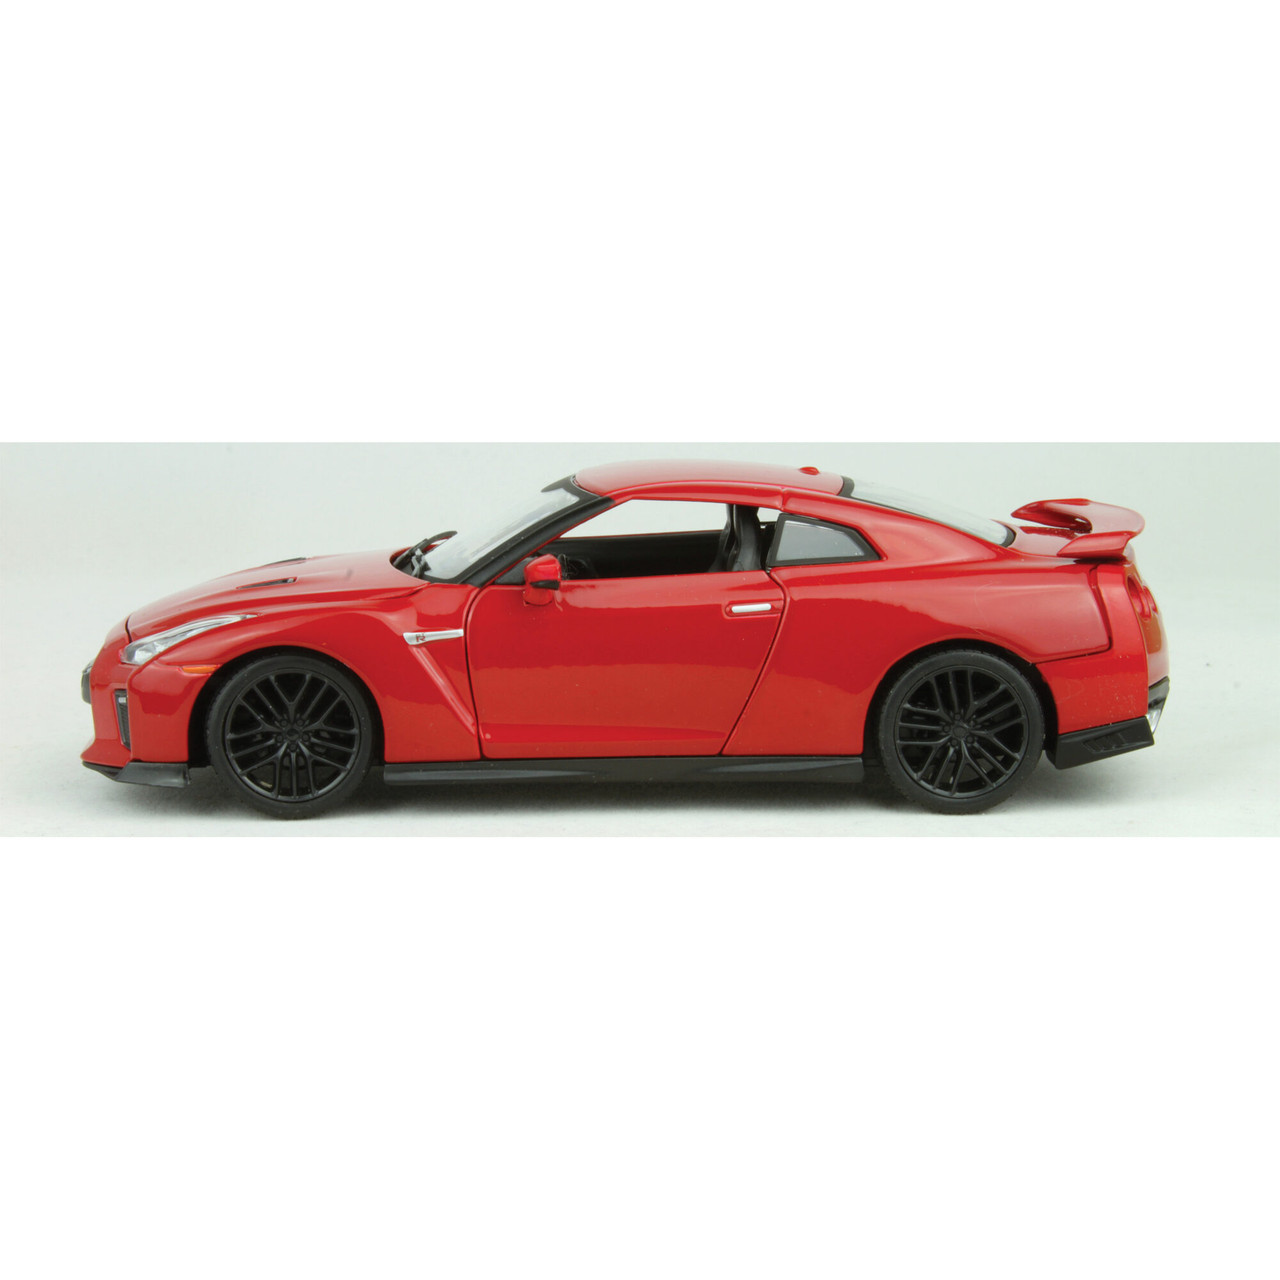 NISSAN GT-R 1:43 MODEL DIECAST SPORTS CAR NEW IN BOX BURAGO FREE POST RED 